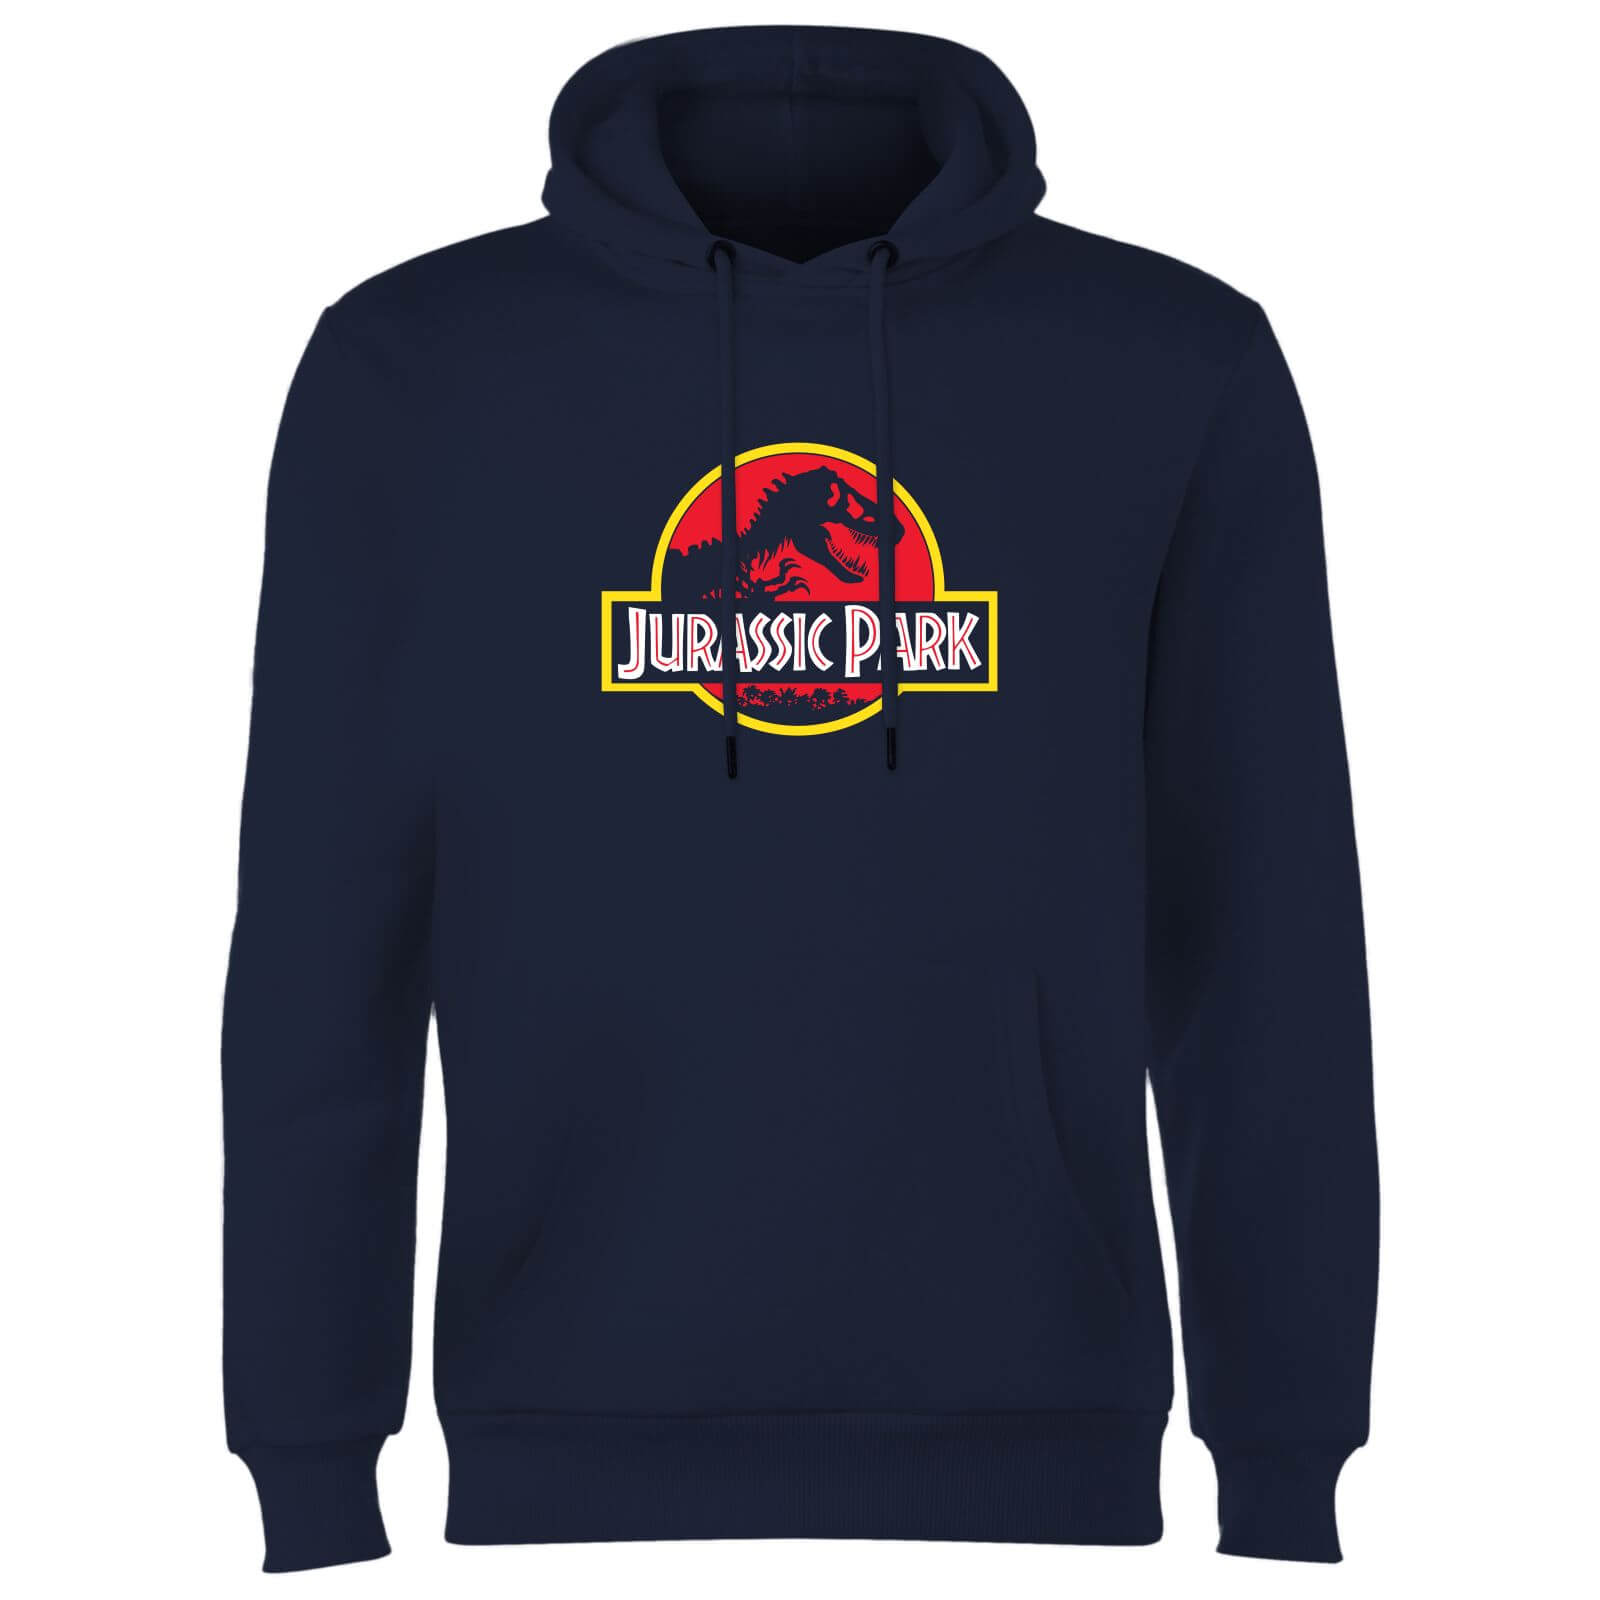  jurassic park logo hoodie